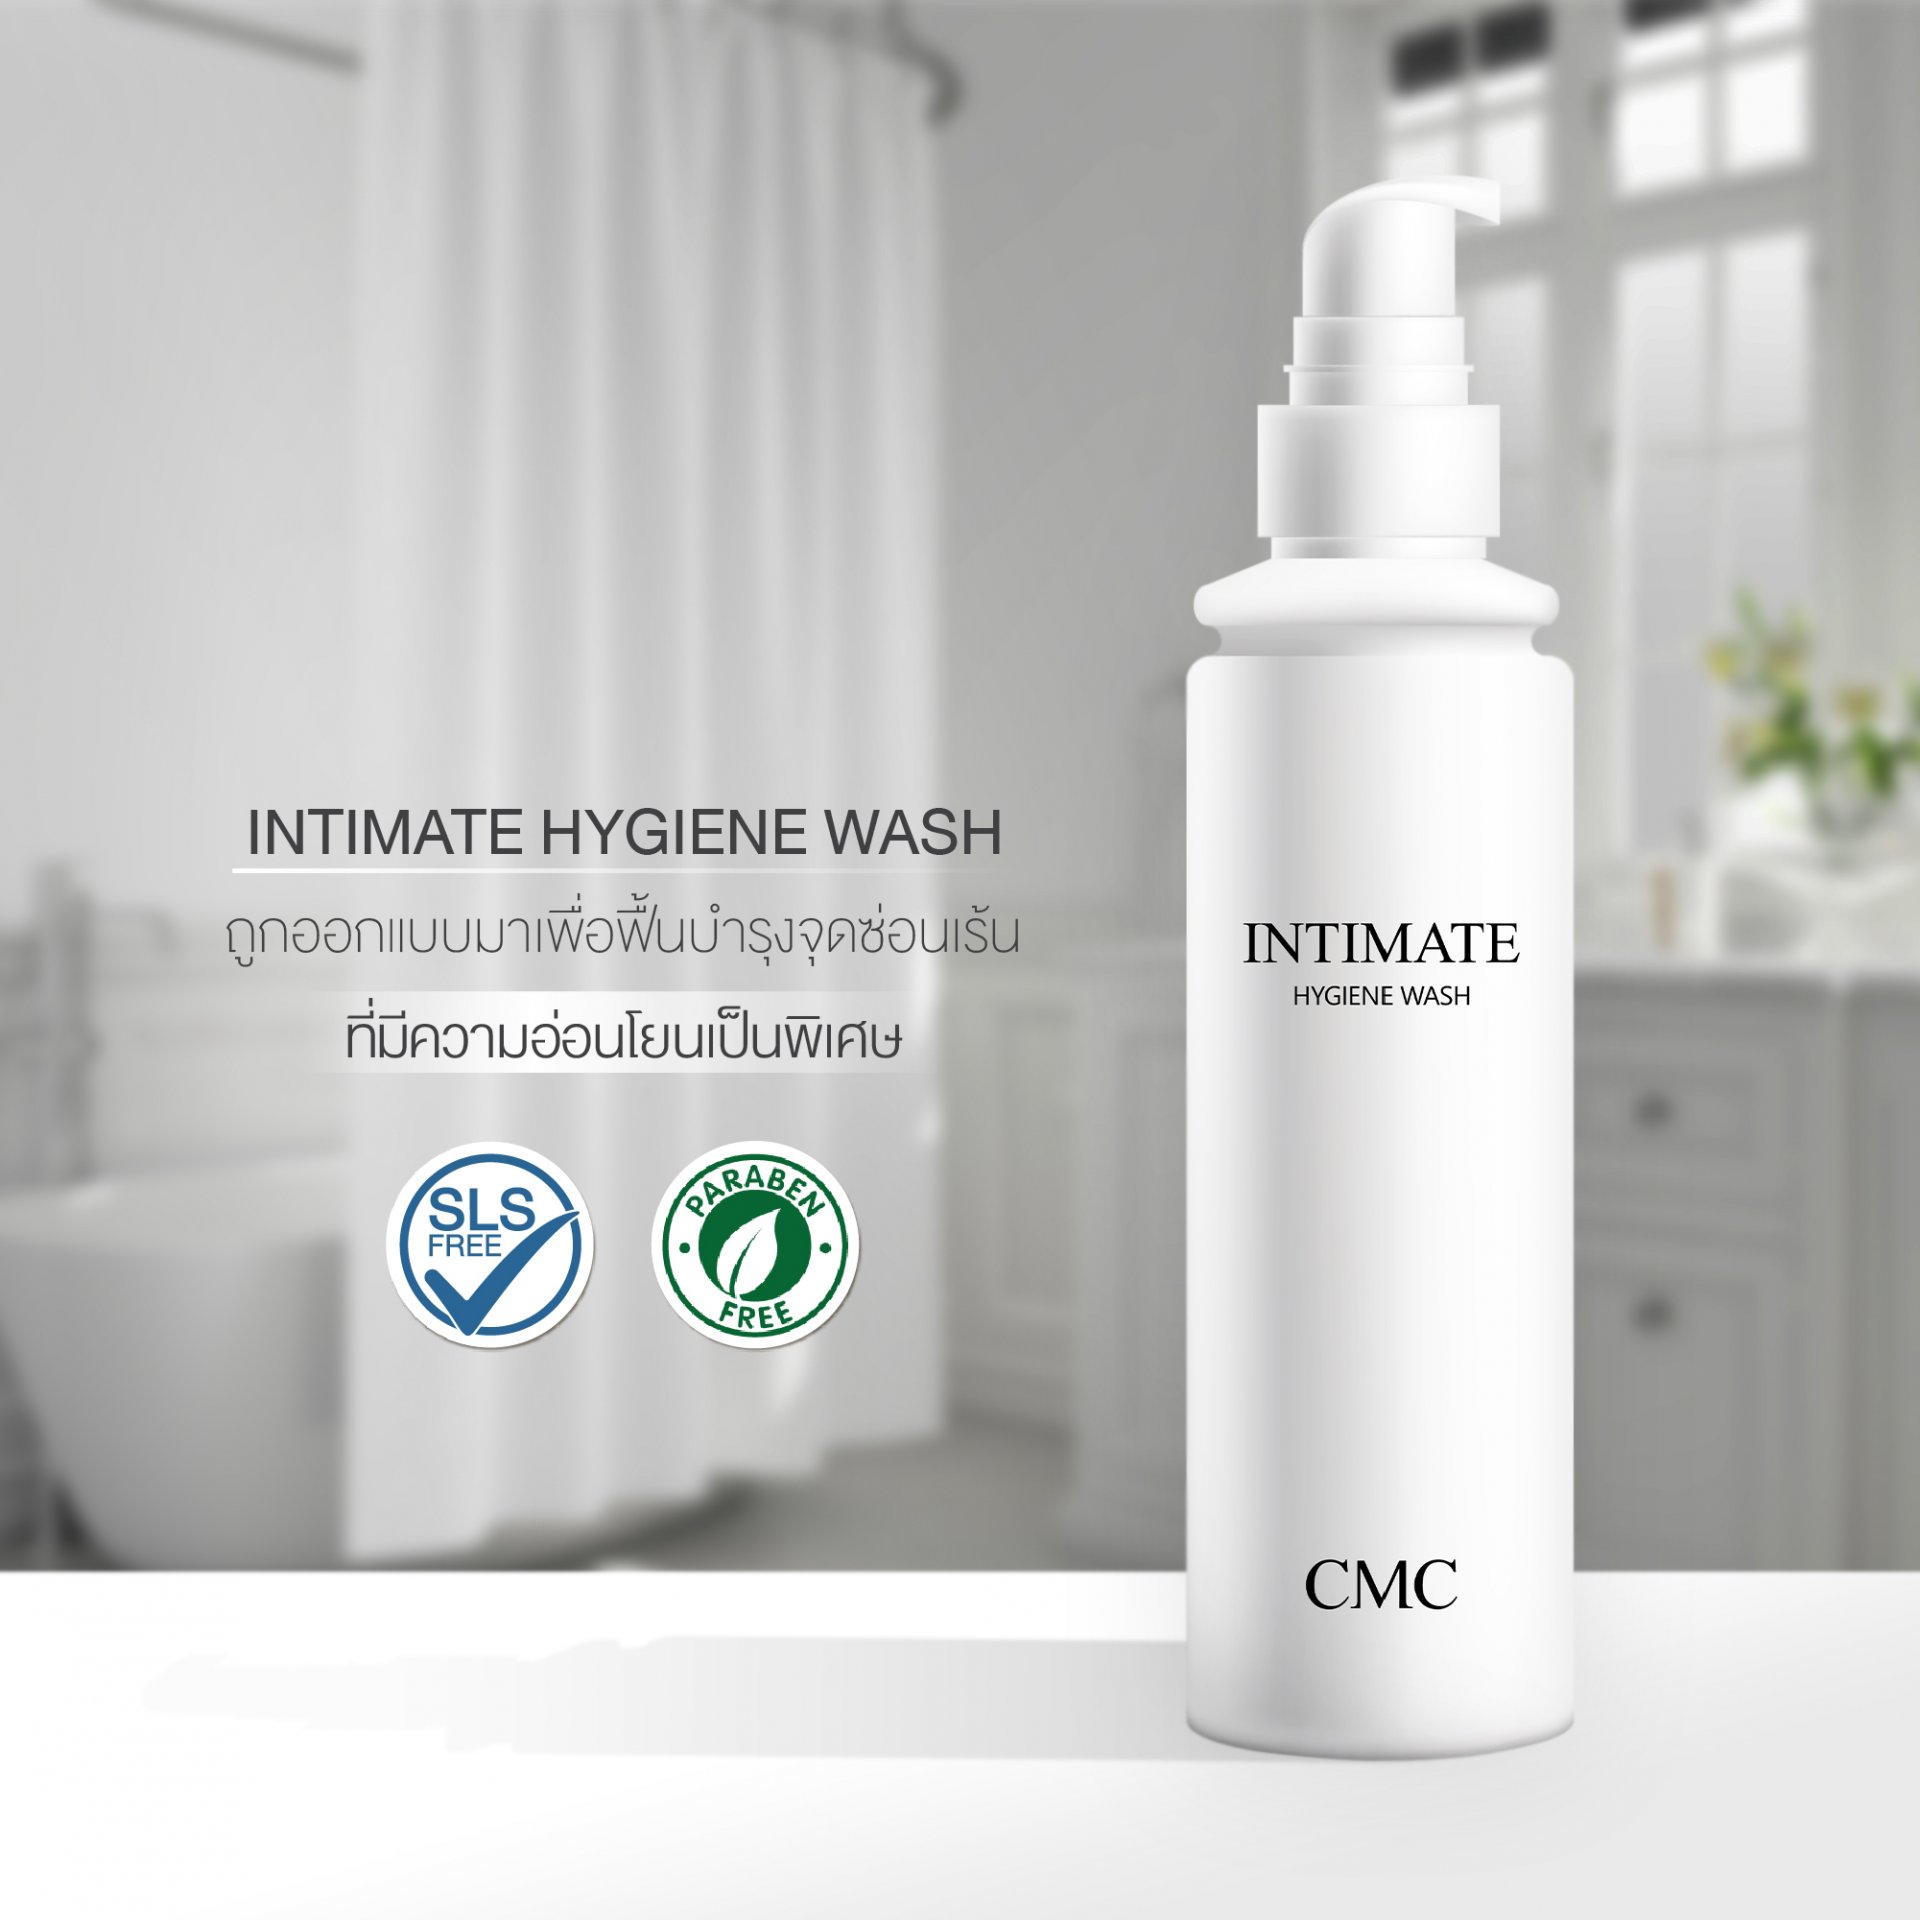 CMC INTIMATE hygiene wash